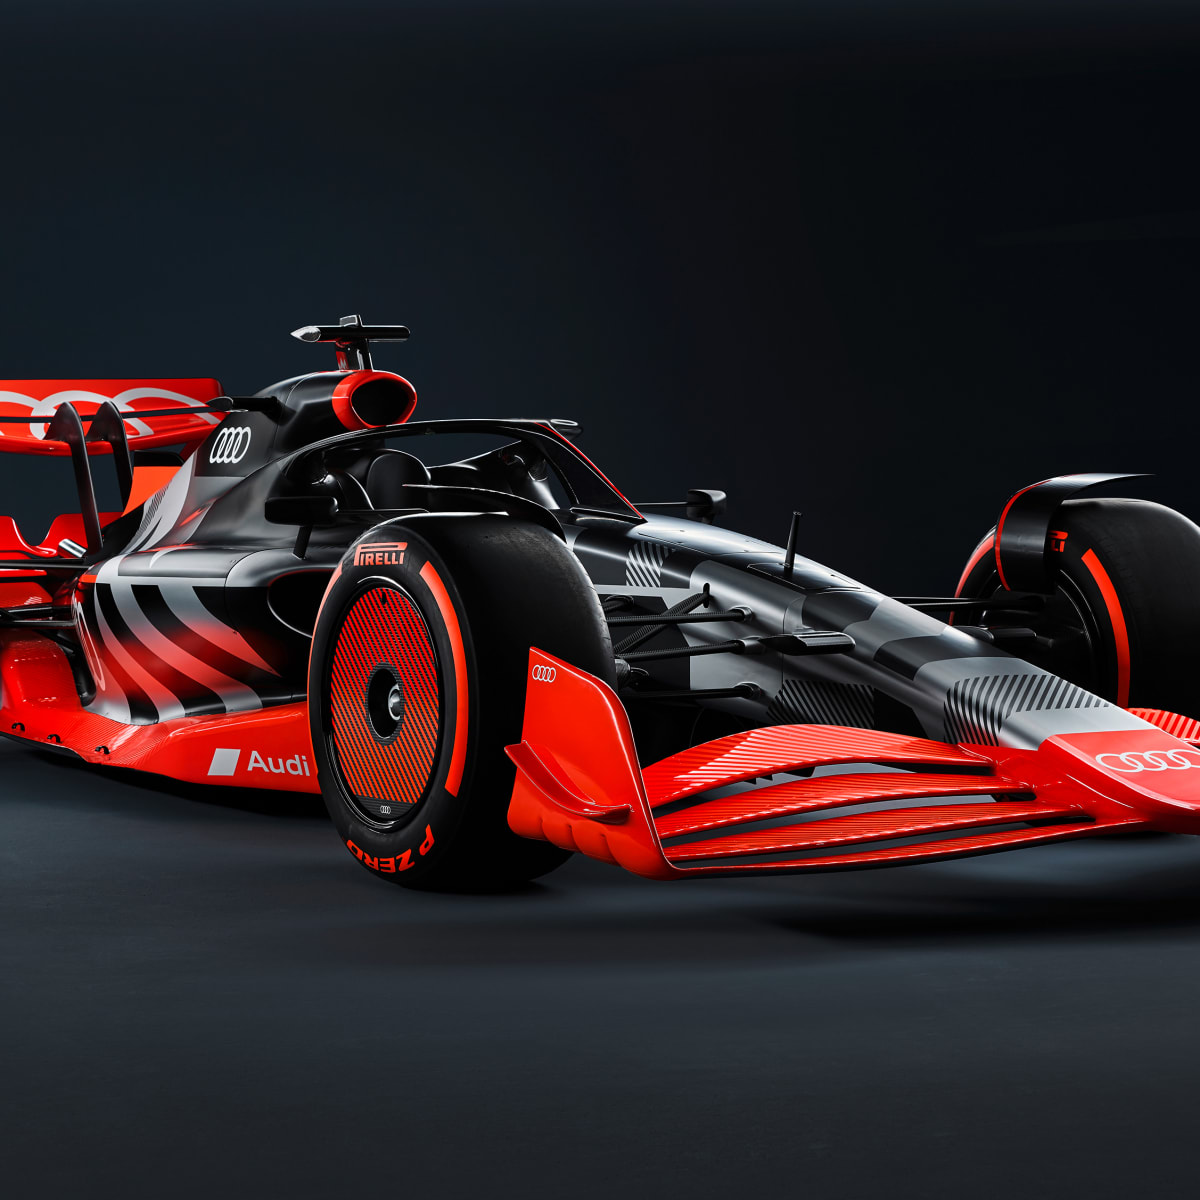 Audi F1 Pushes Back At McLaren